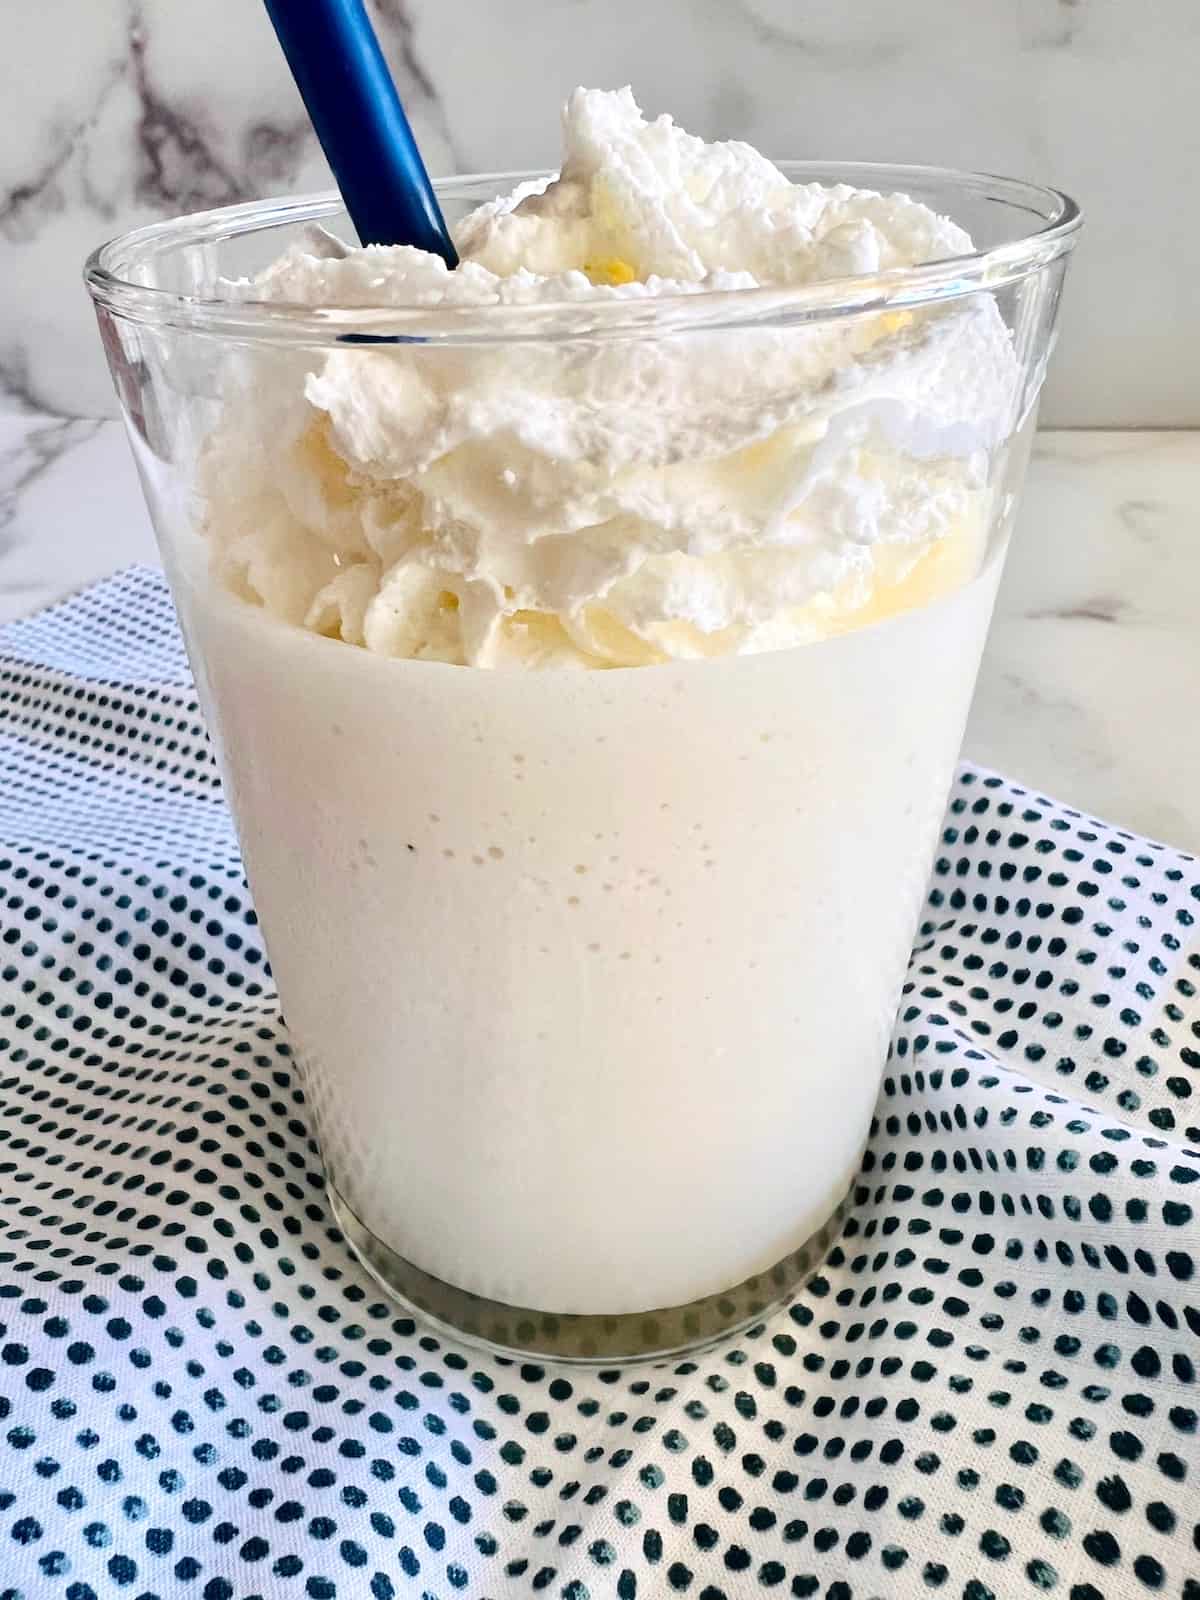 Coconut Milkshake Closeup with whipped cream straw and polka dot napkin.